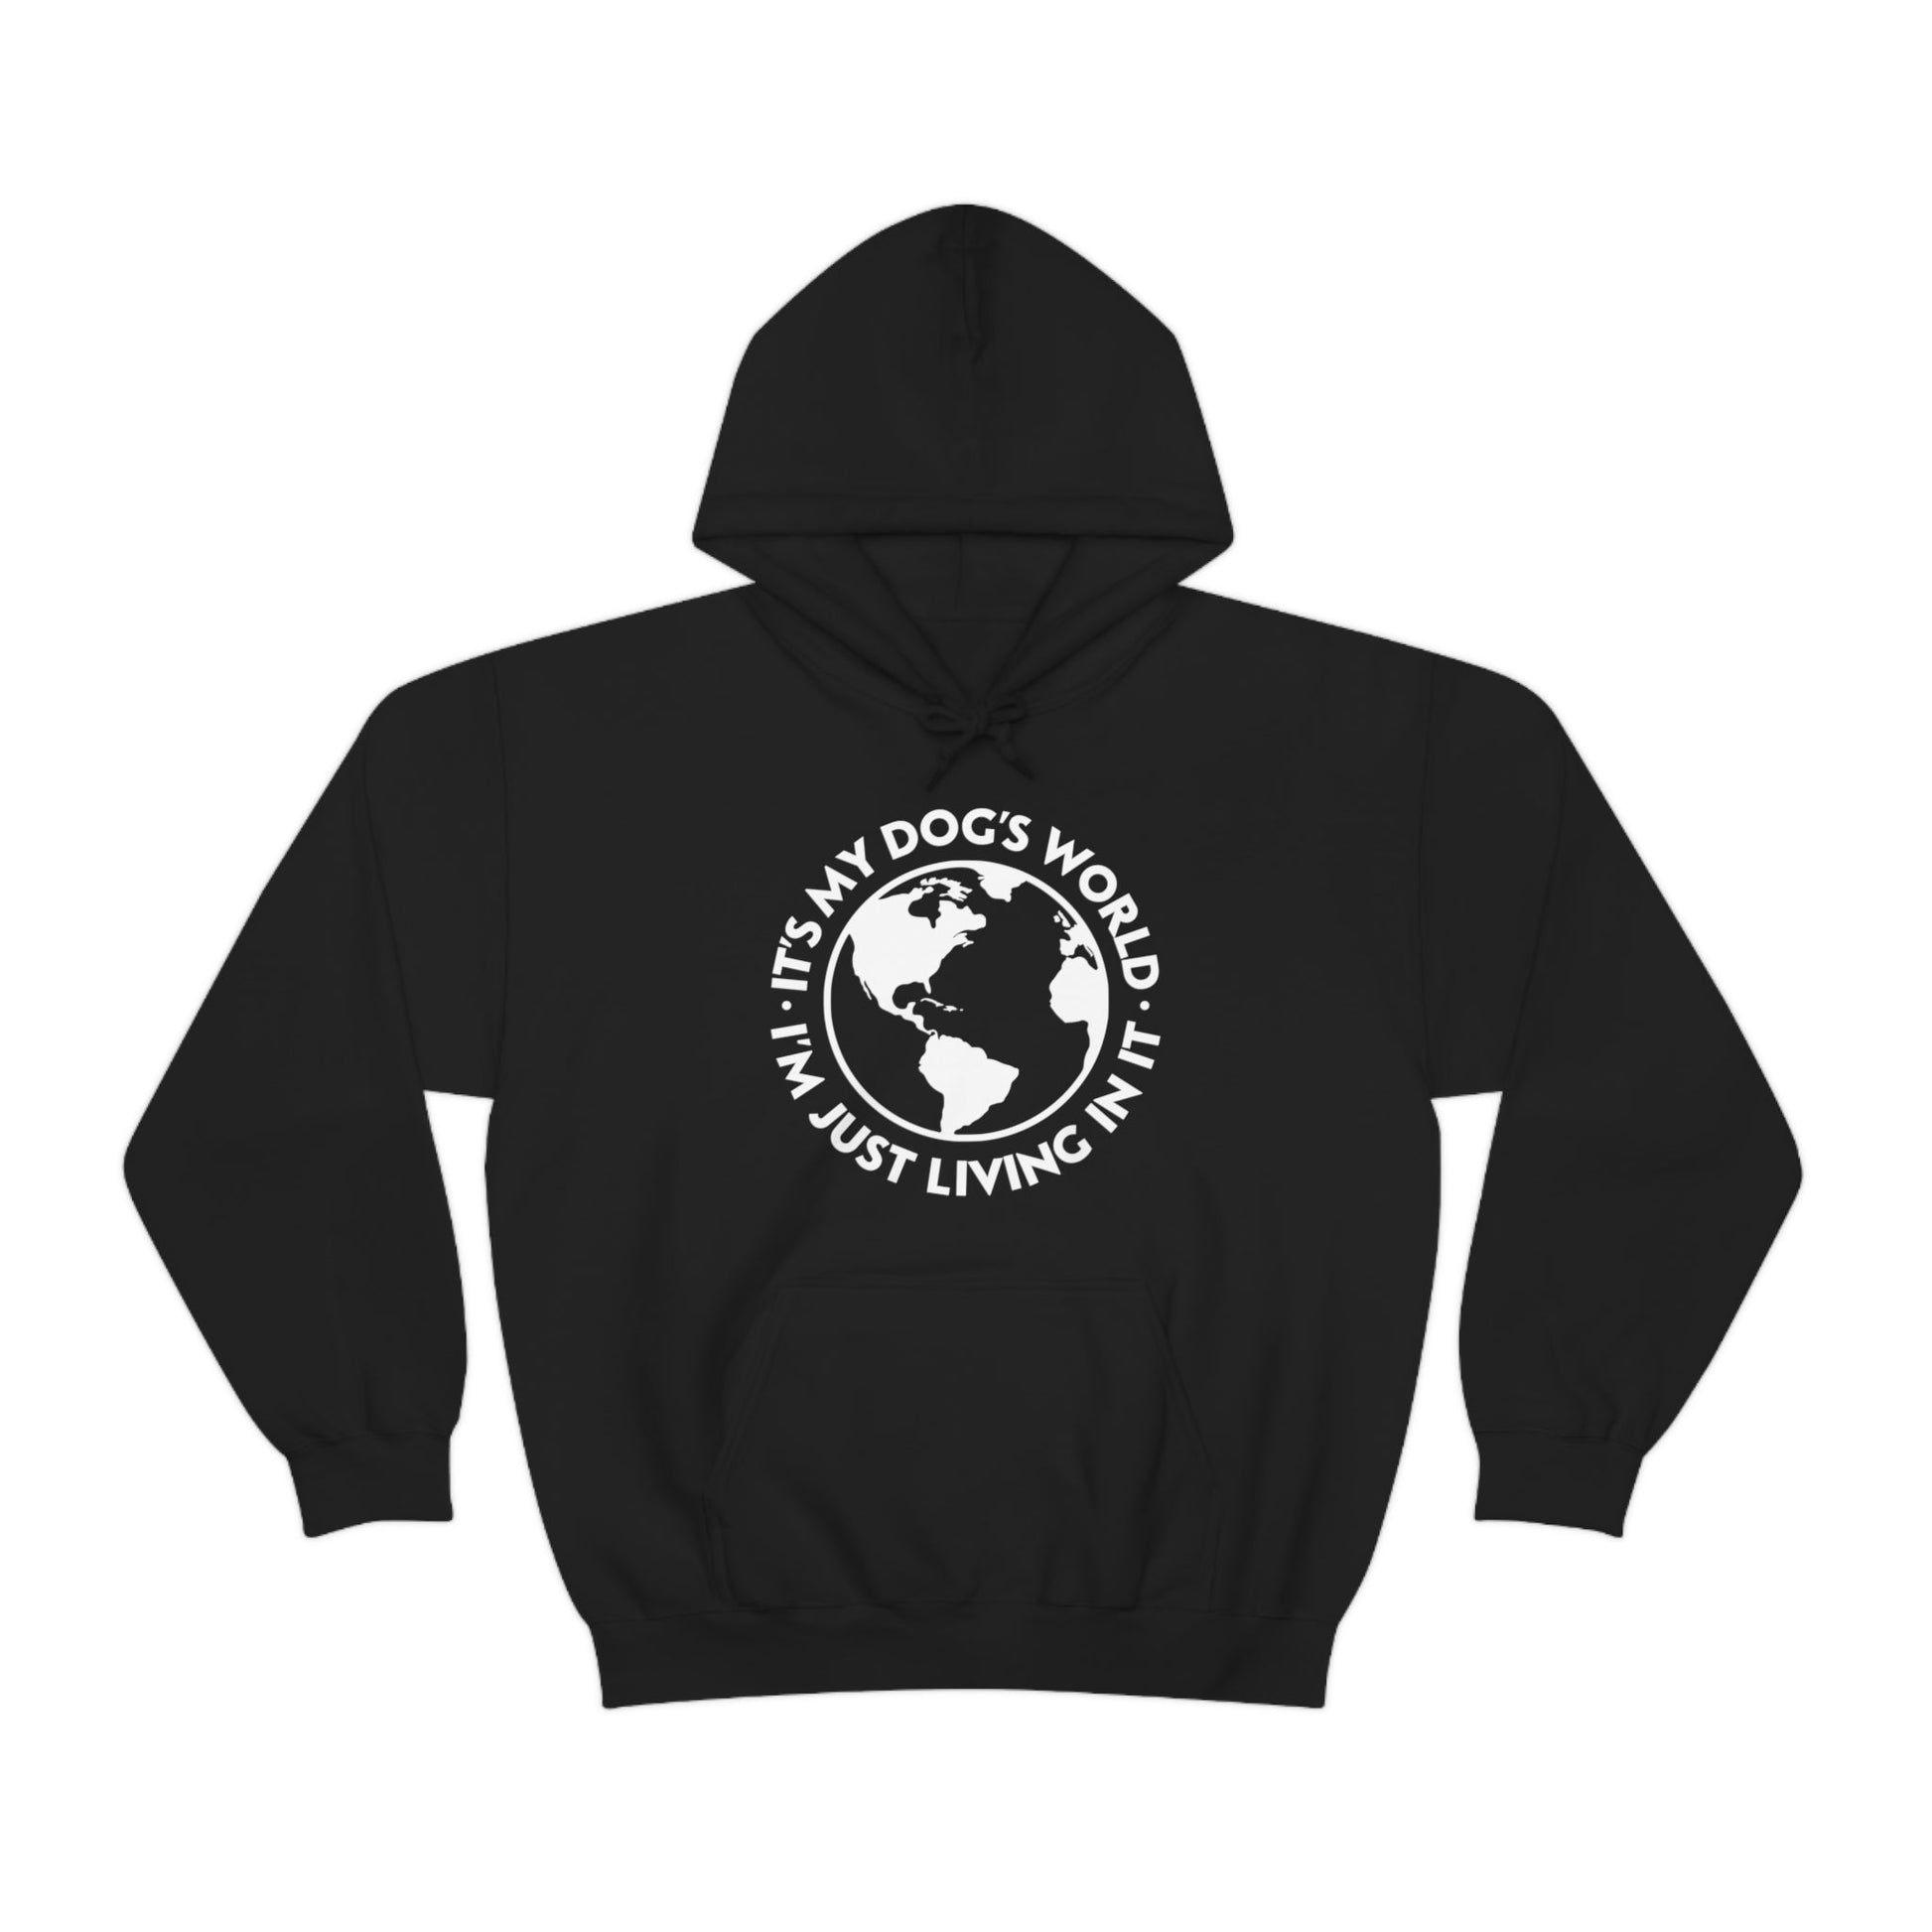 It's My Dog's World | Hooded Sweatshirt - Detezi Designs-33499509049670730637